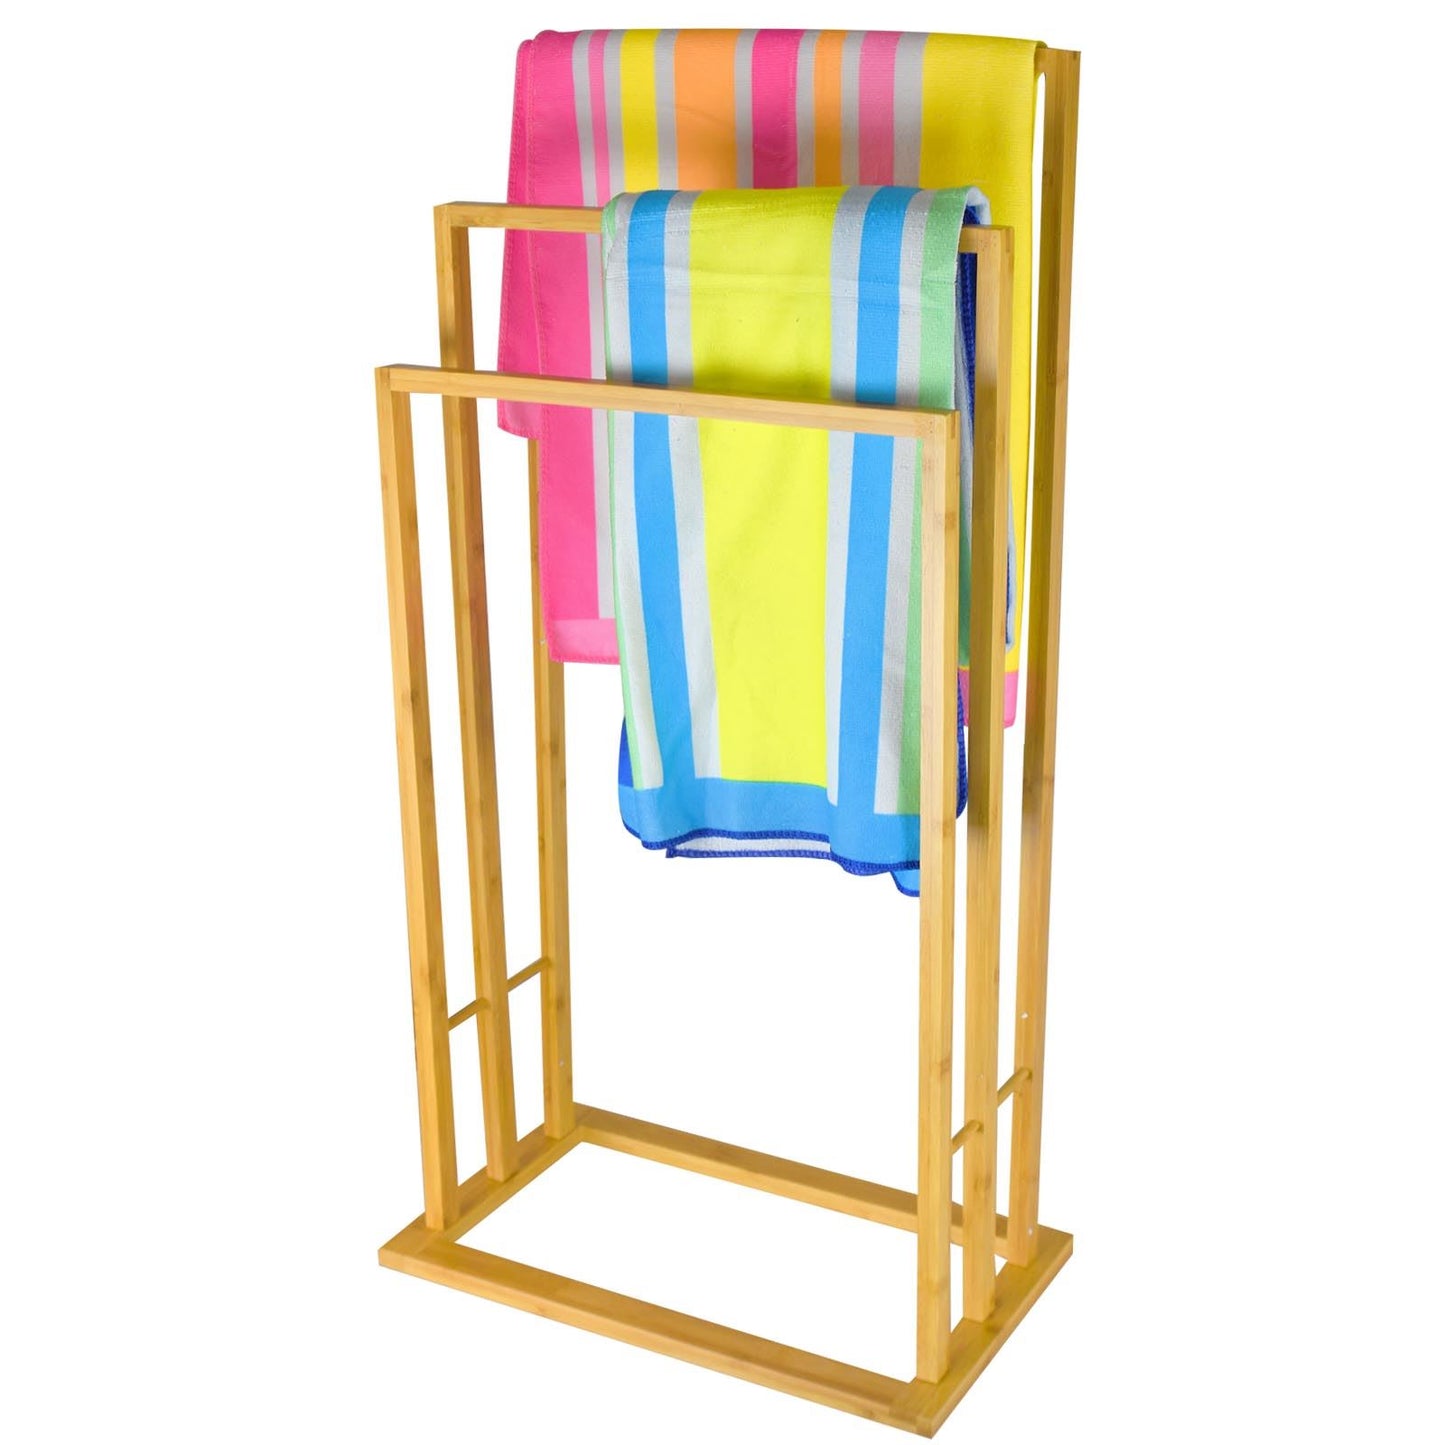 Bamboo Wood Towel Rack: 3 Tier Bathroom Organizer Free Standing